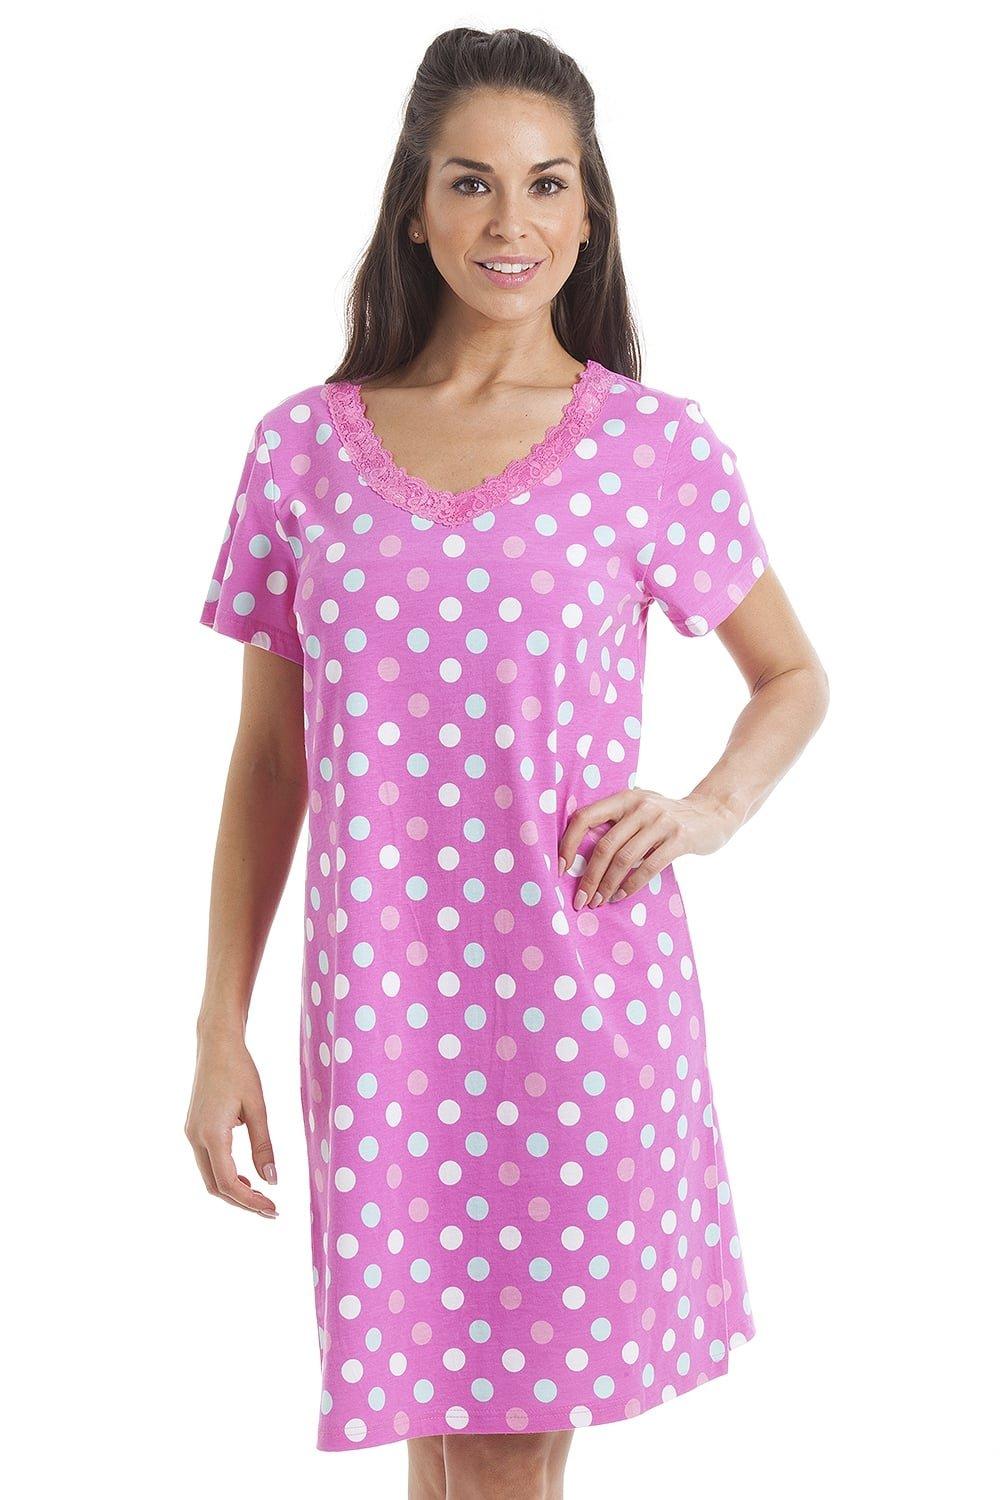 Polka Dot Print Cotton Summer Nightshirt